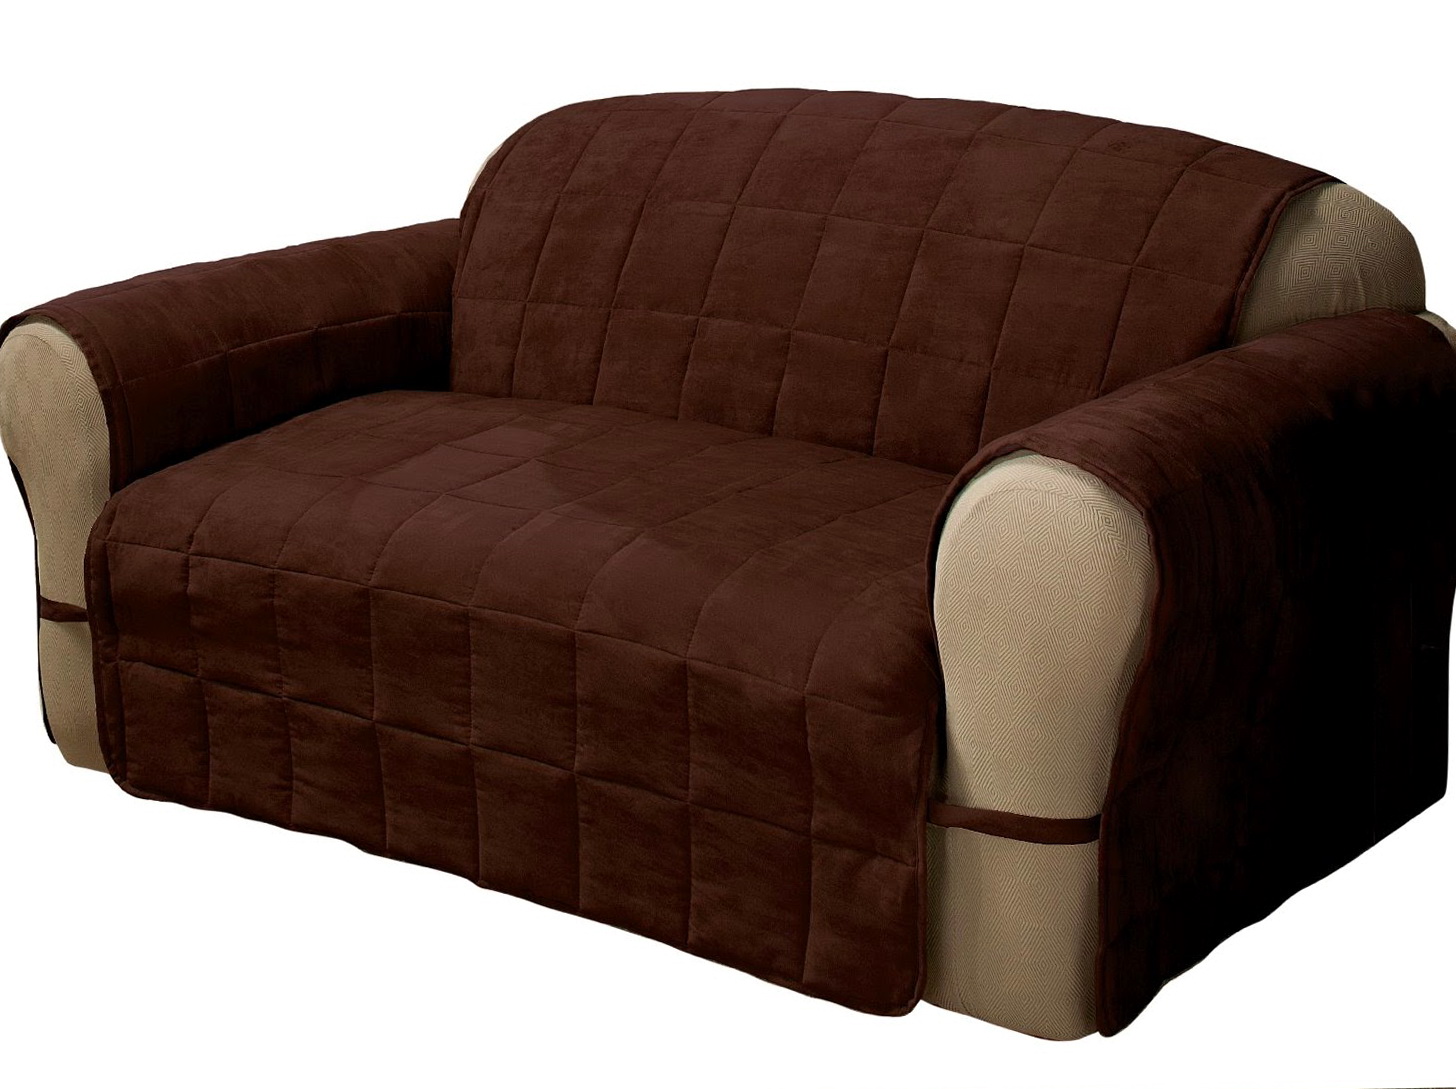 cushion cover for leather sofa